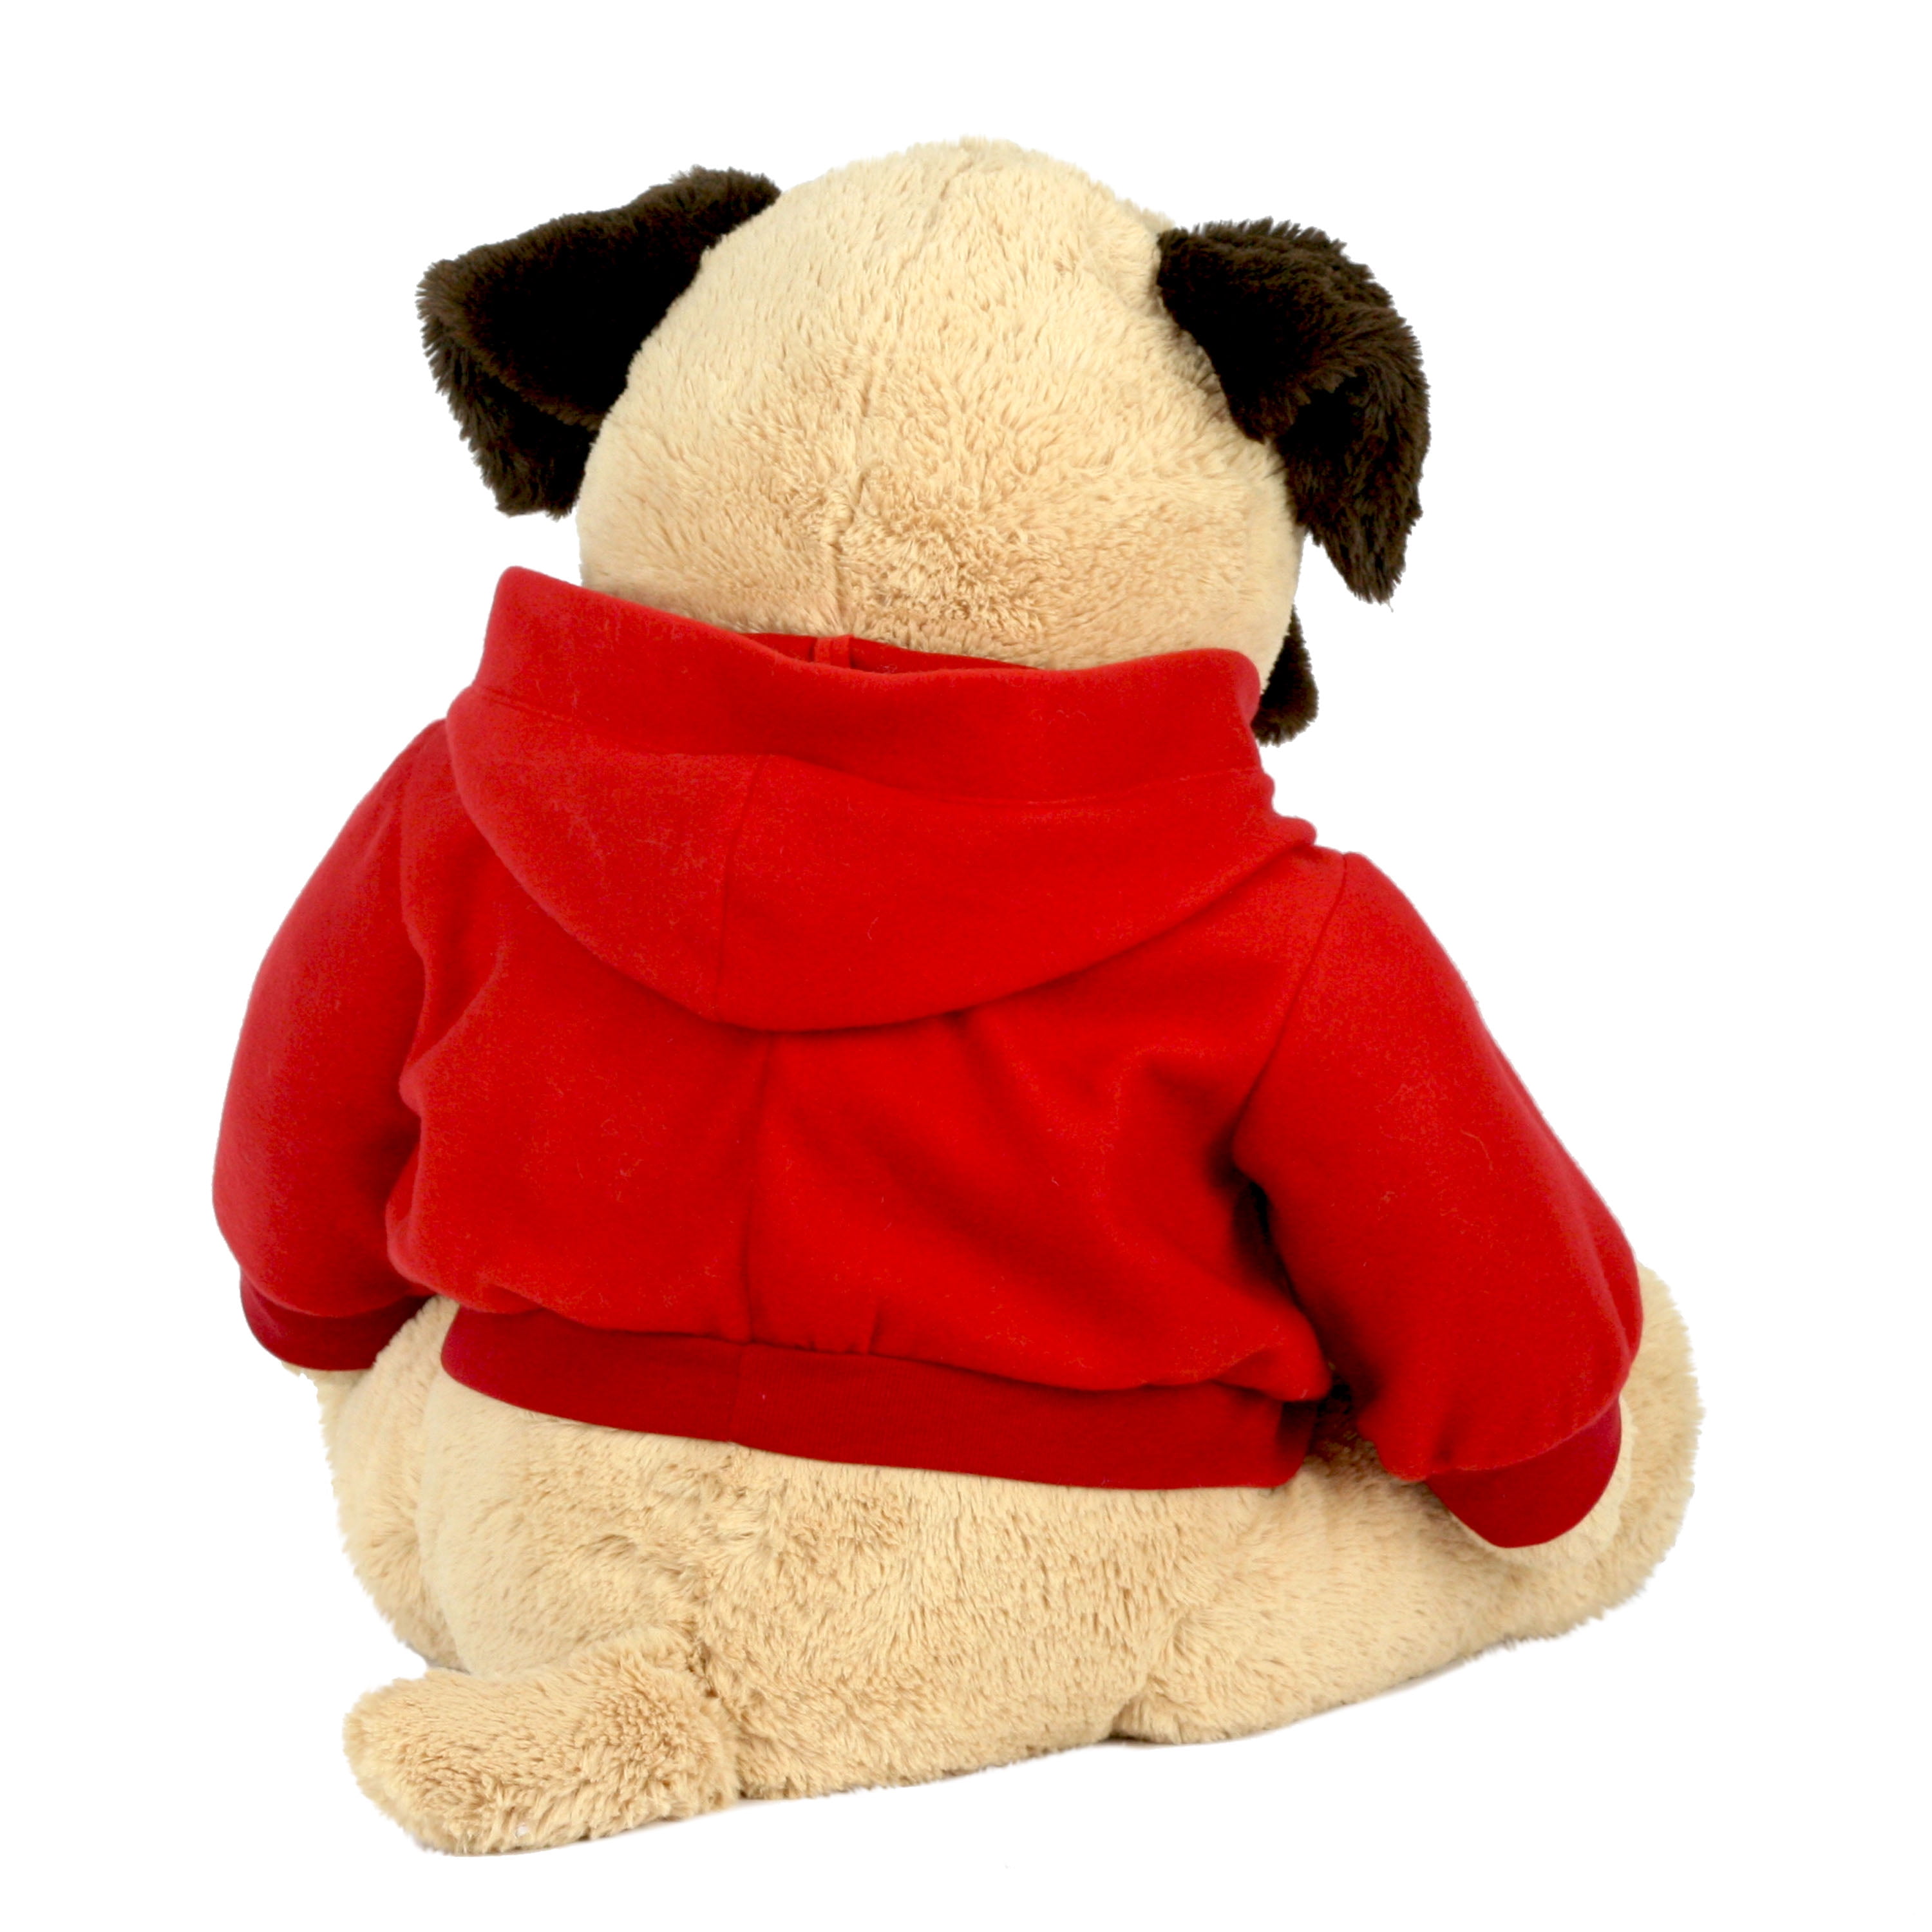 valentine pug stuffed animal